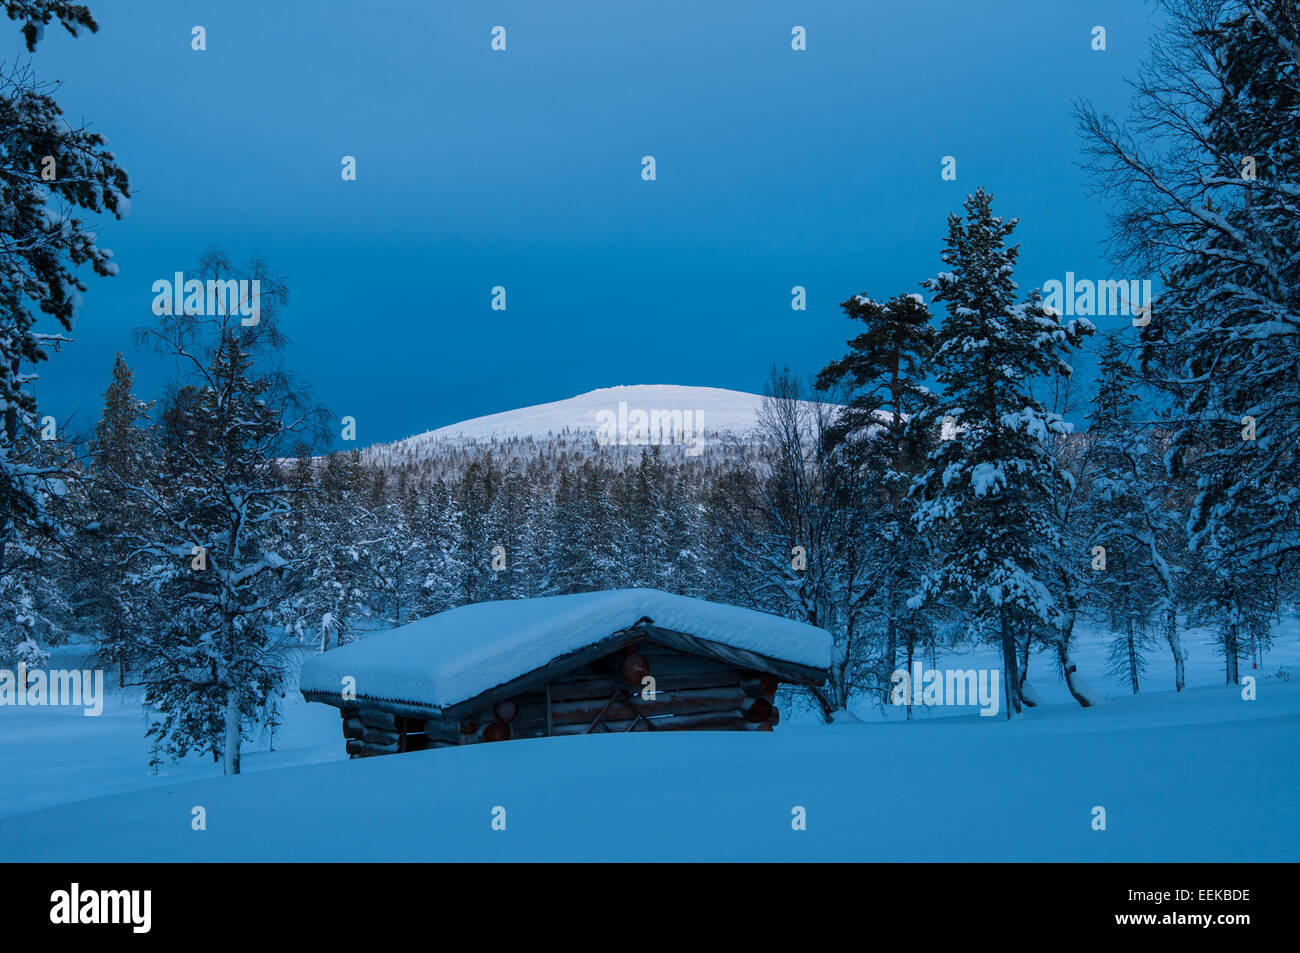 This snowy landscape shot was taken during the period of polar night in Urho Kekkonen national park, Finland. Stock Photo